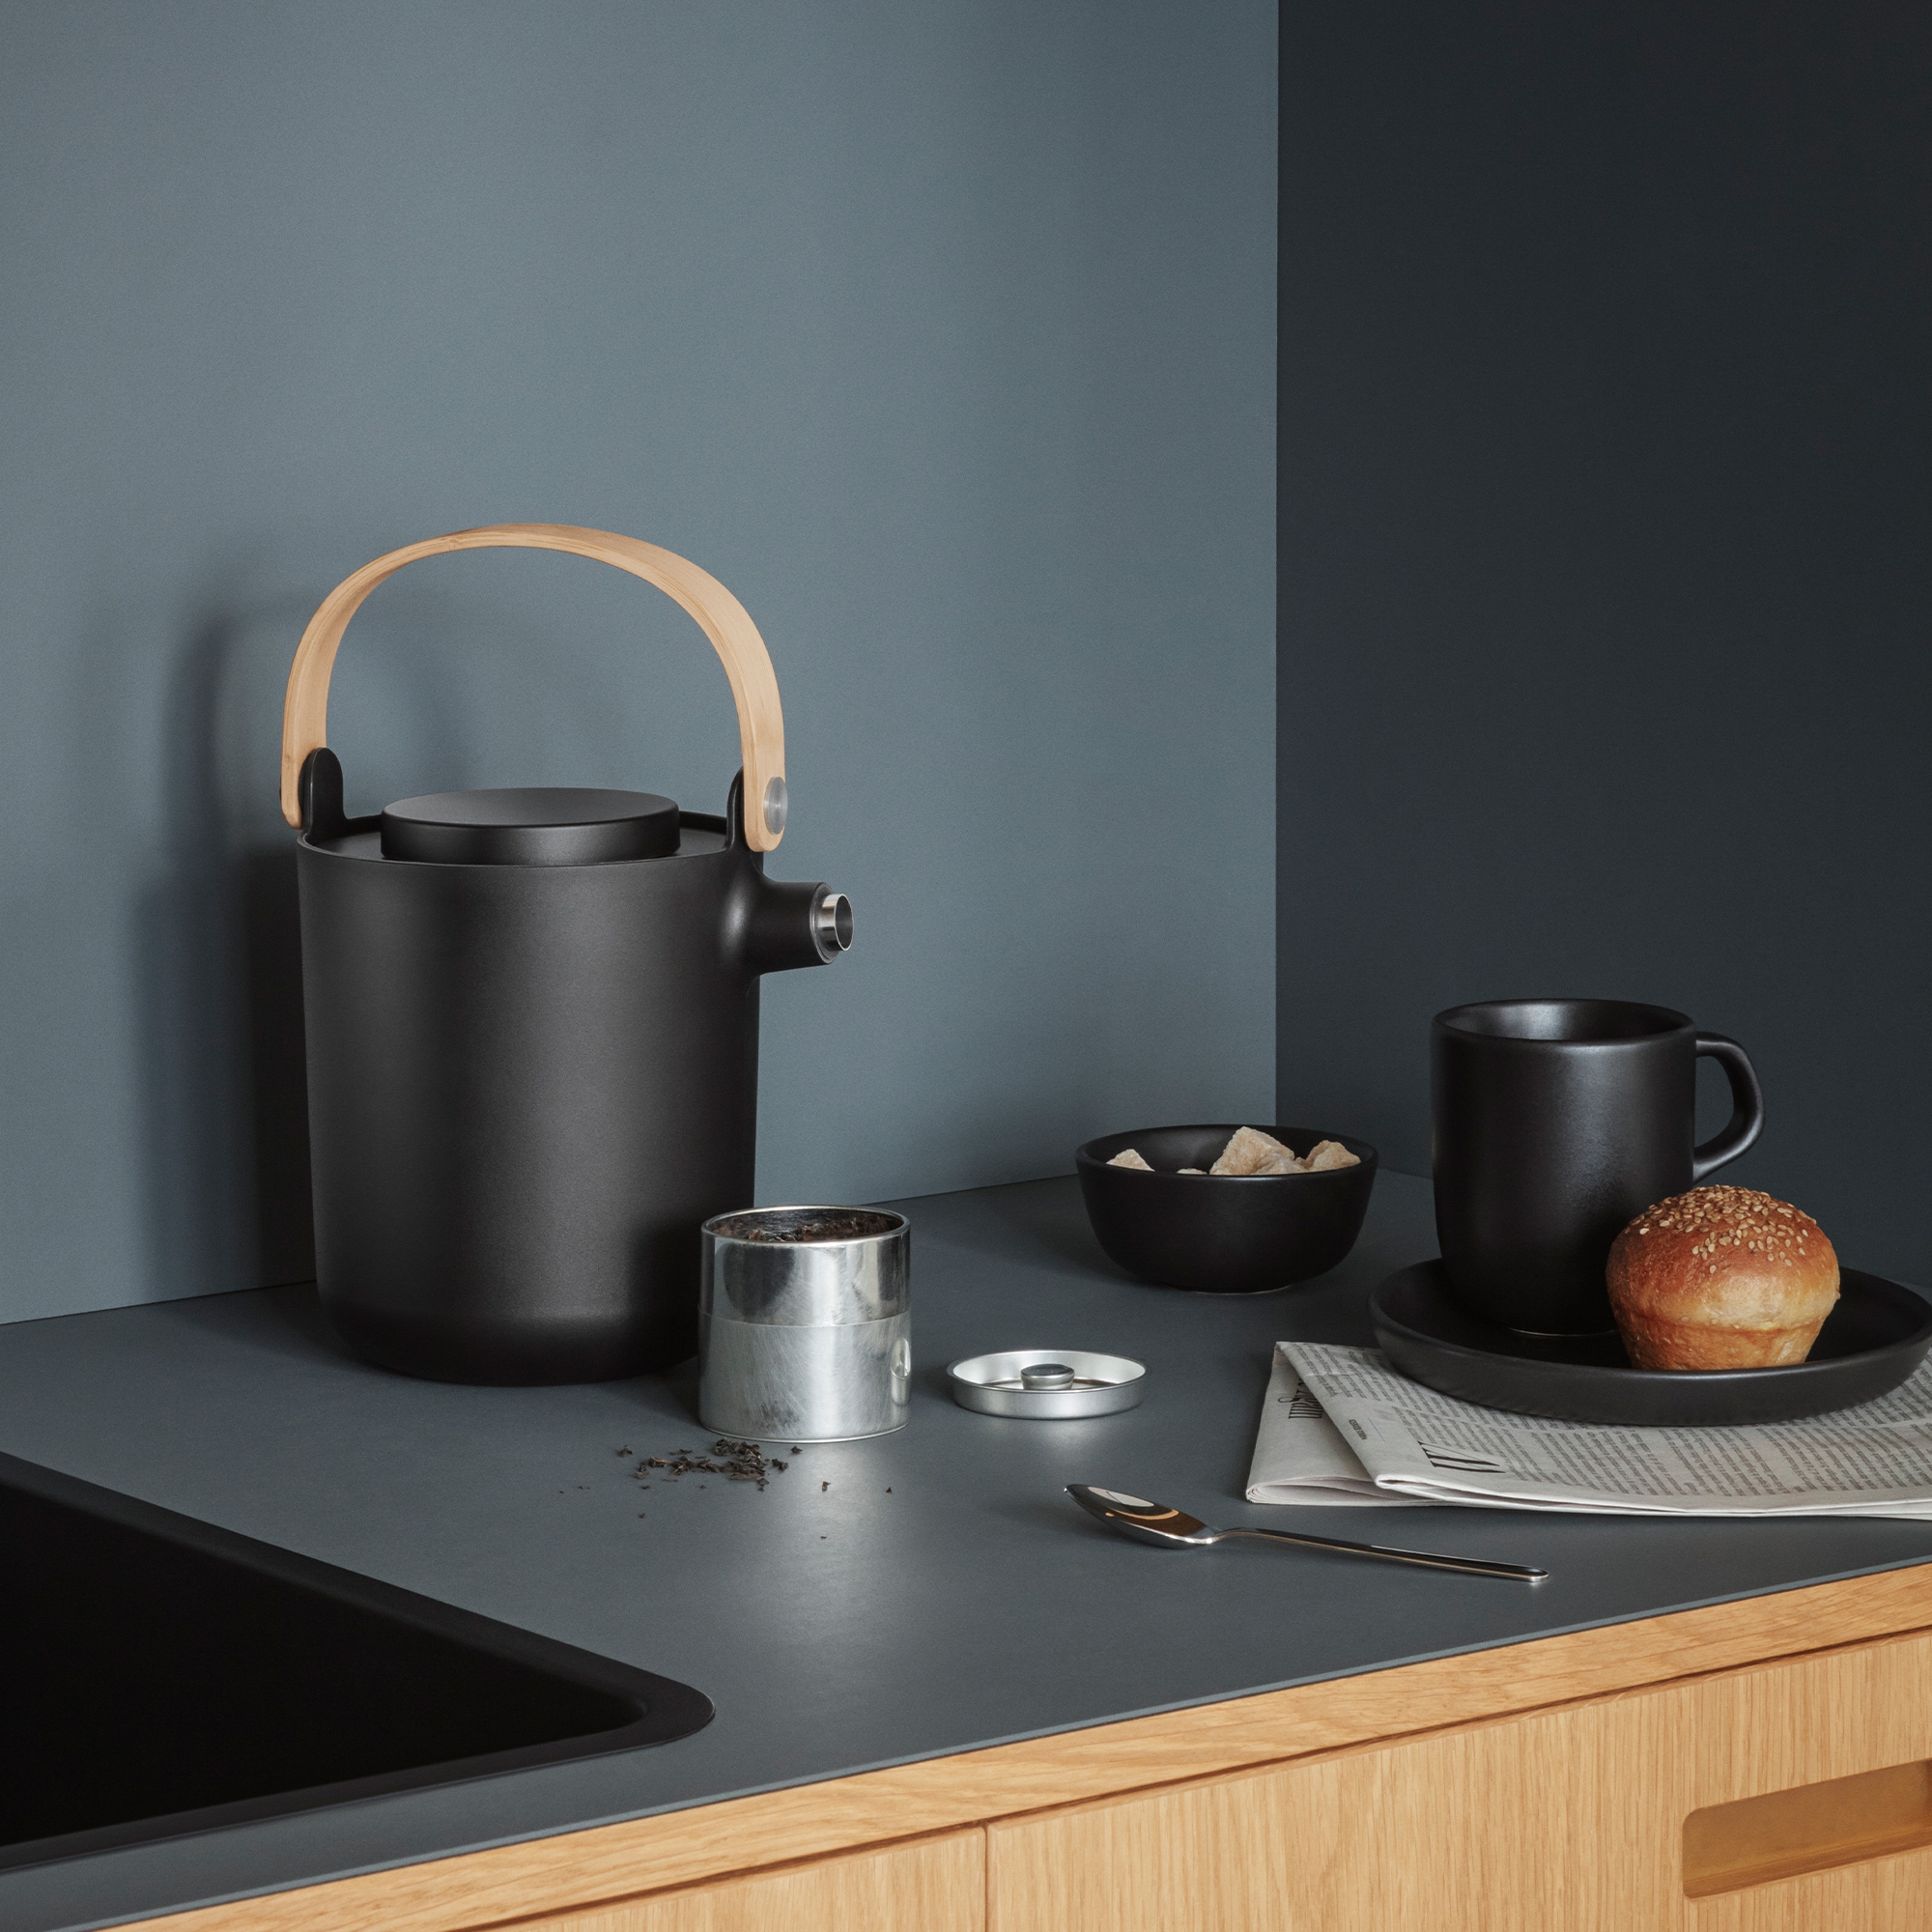 Eva Solo - Tea thermos jug - Nordic kitchen